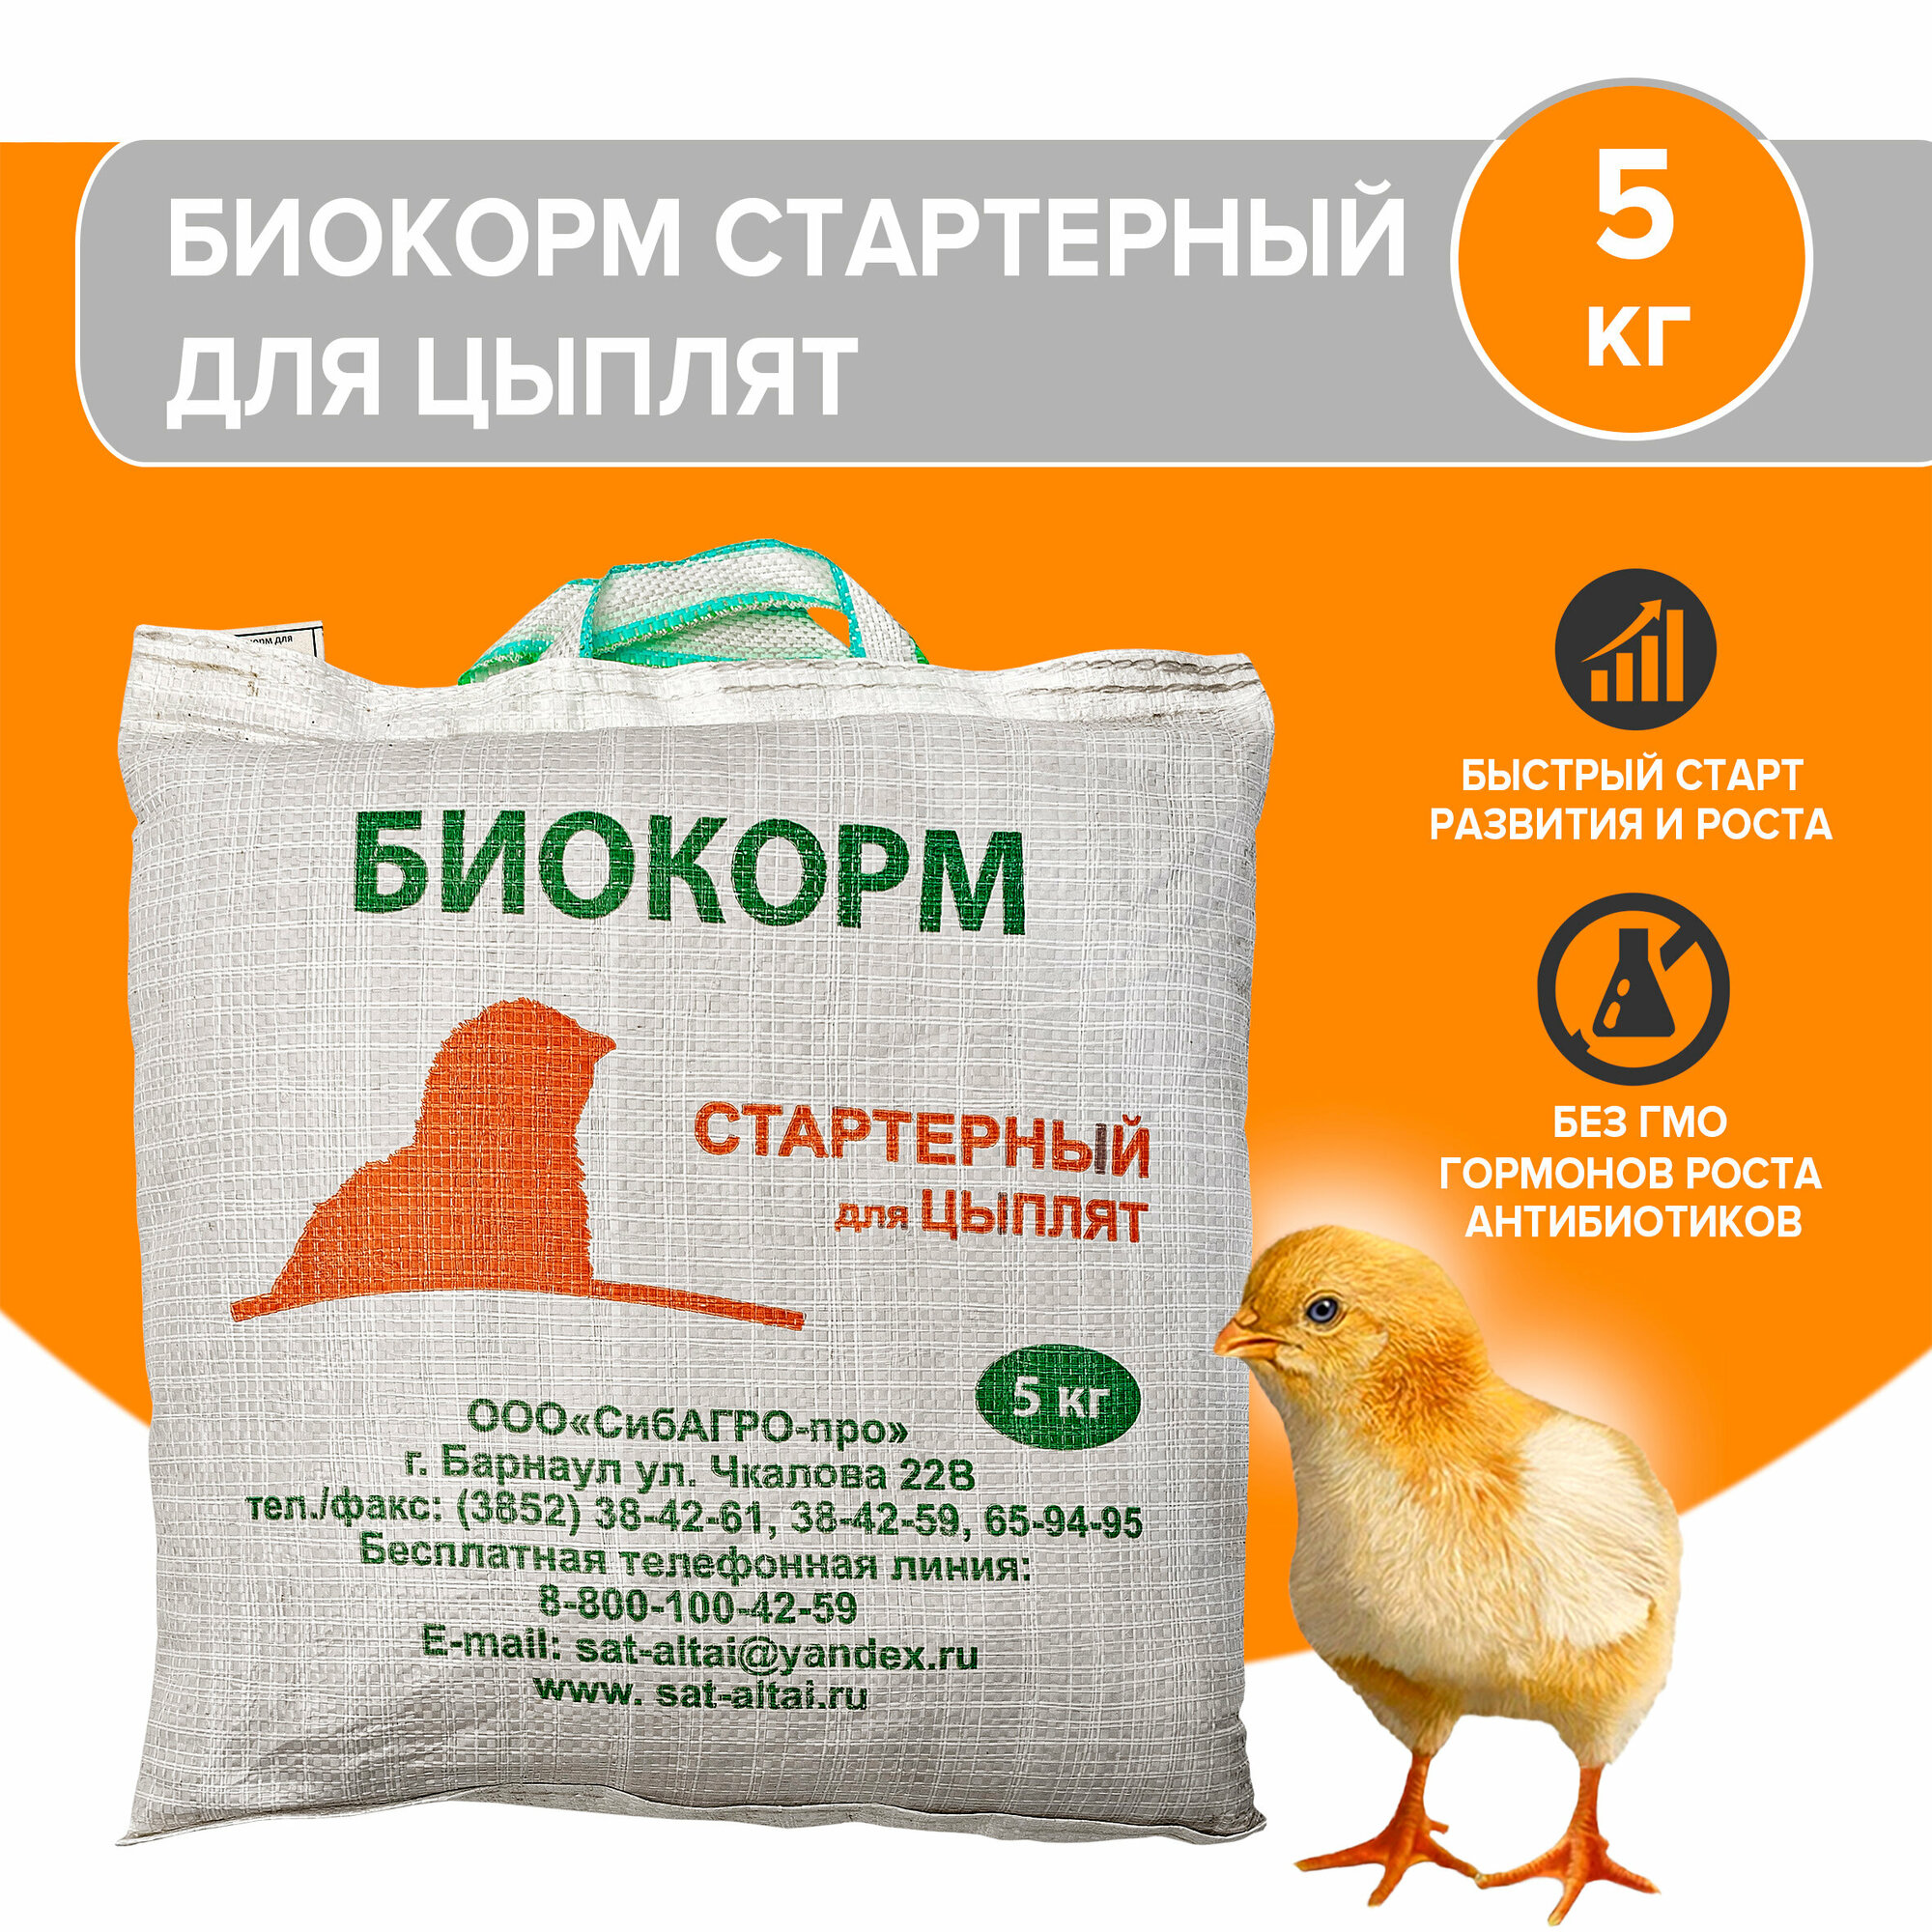 Биокорм стартер готовый корм для цыплят 5 кг